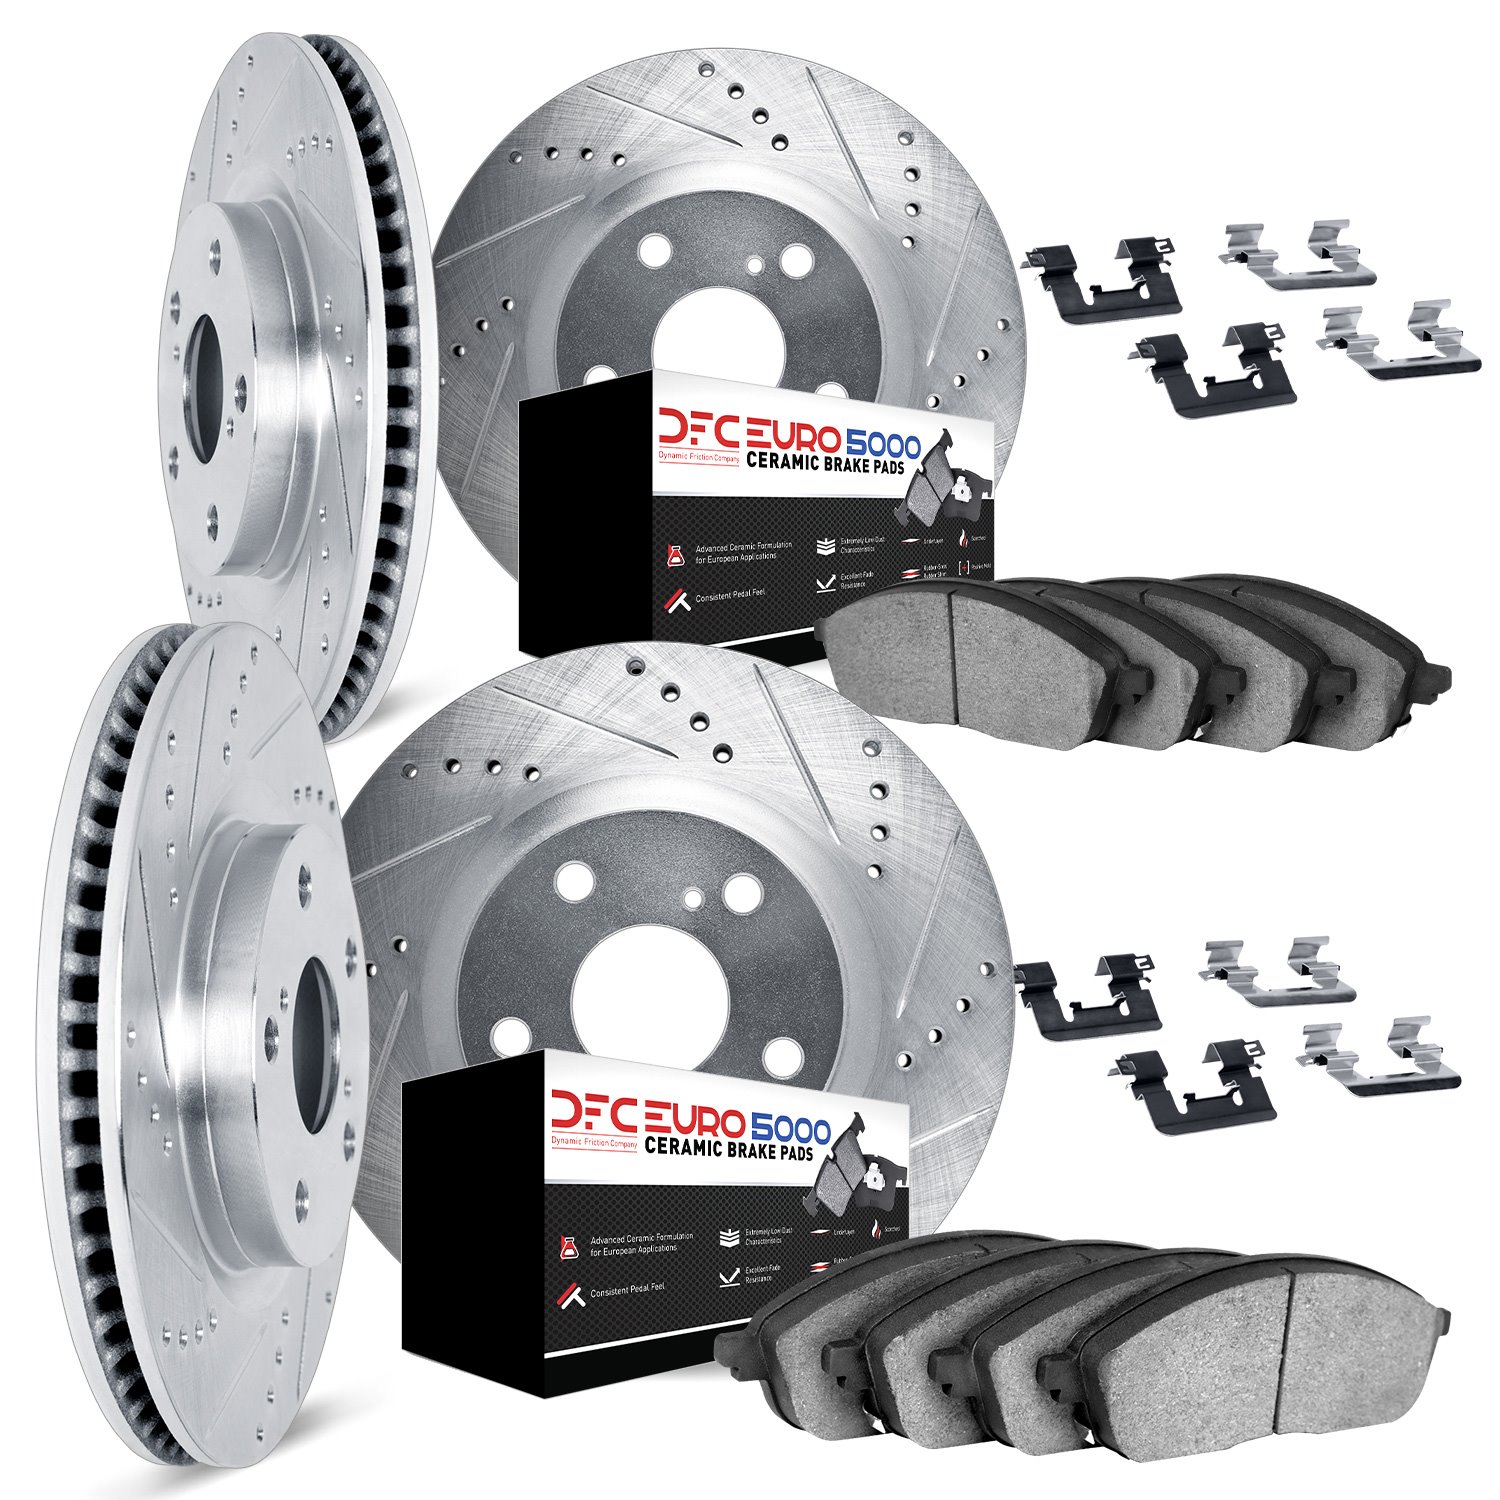 7614-54000 Drilled/Slotted Brake Rotors w/5000 Euro Ceramic Brake Pads Kit & Hardware [Silver], 2000-2006 Multiple Makes/Models,